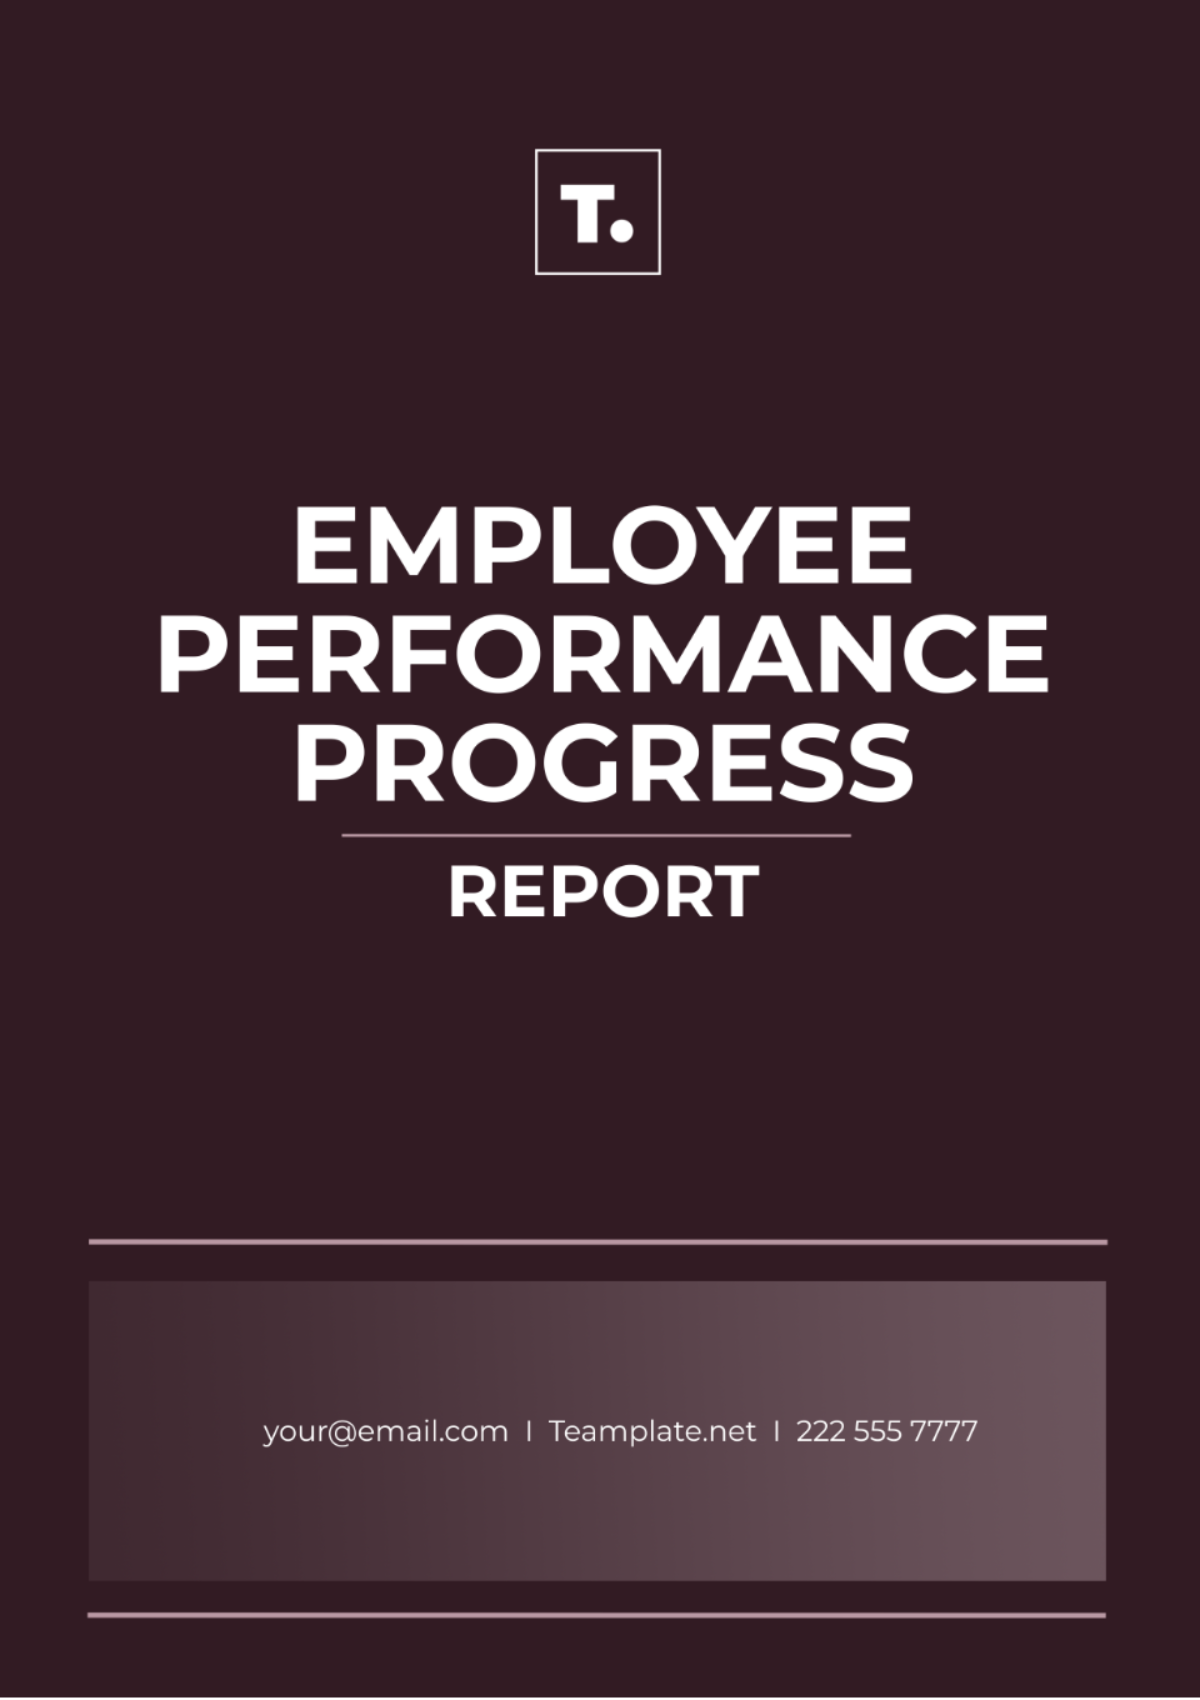 Employee Performance Progress Report Template